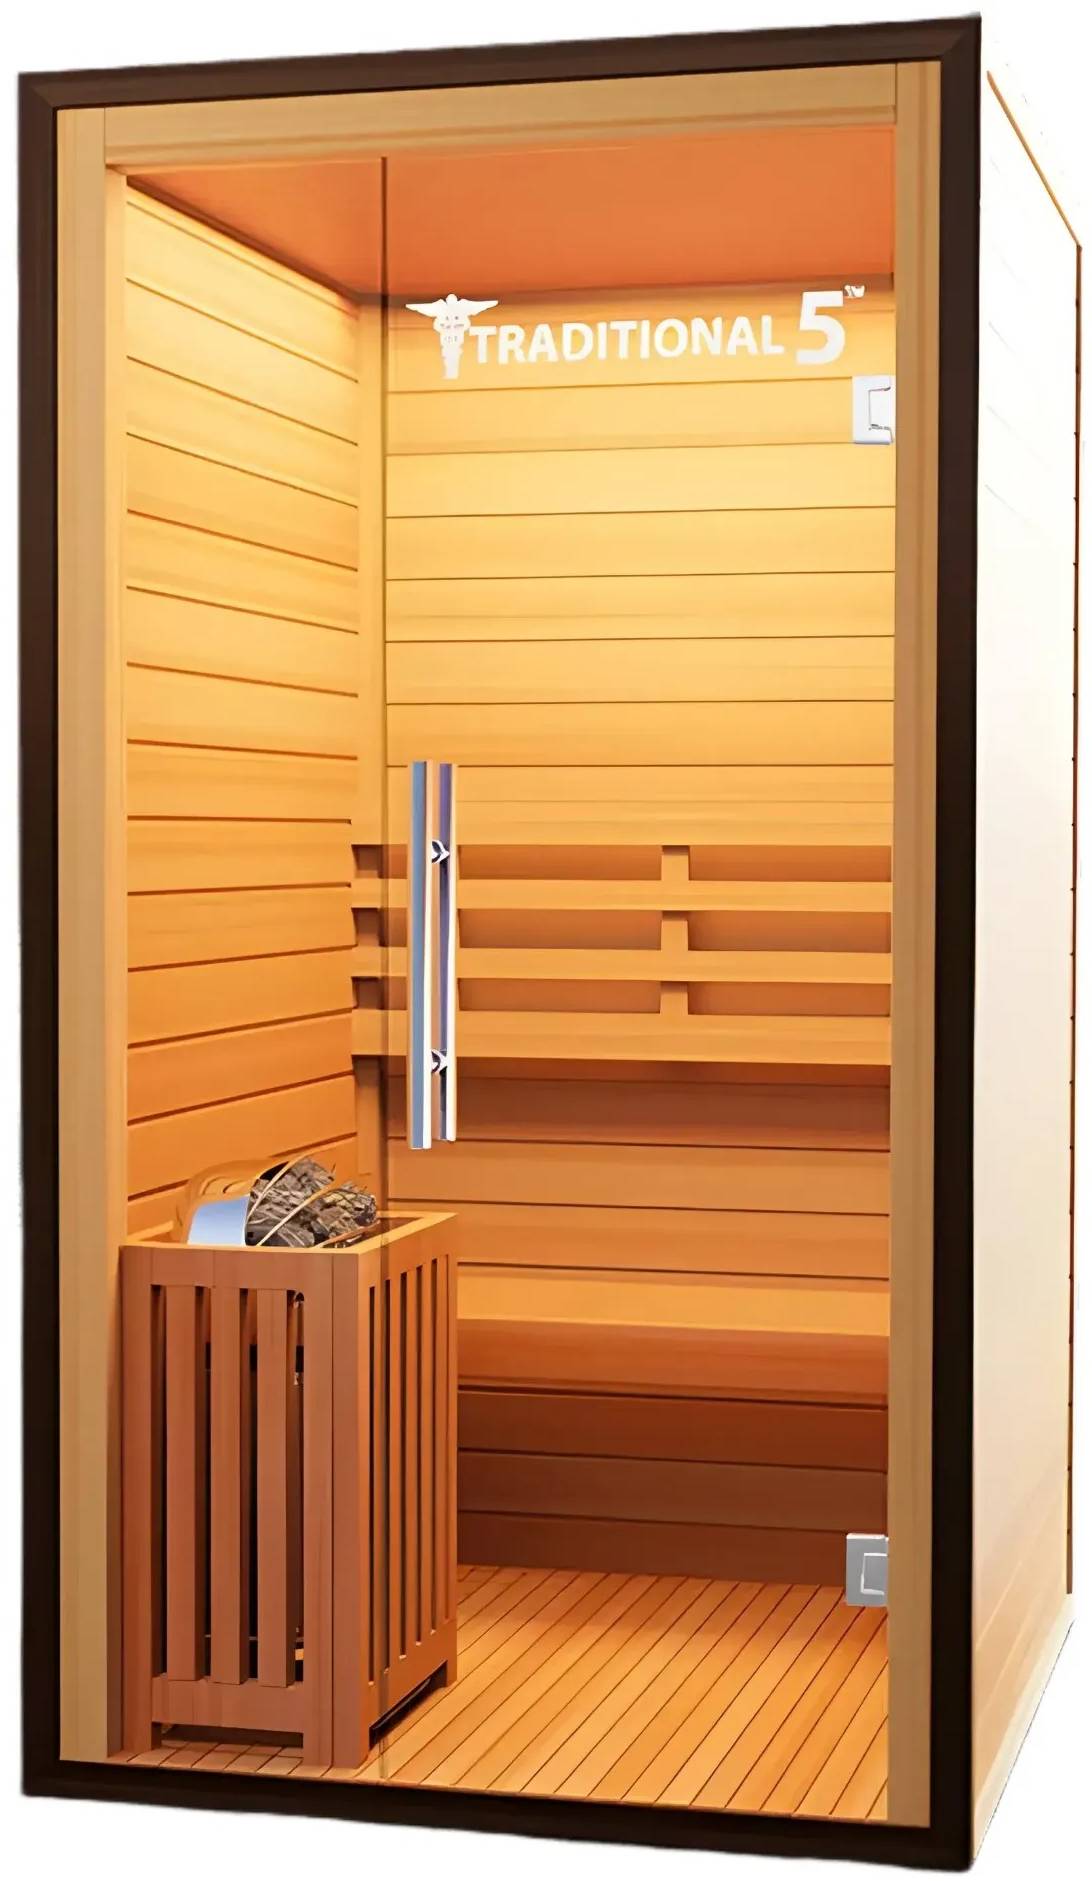 ZiahCare's Medical Saunas 1-2 Person Traditional Sauna Model 5 Mockup Image 7